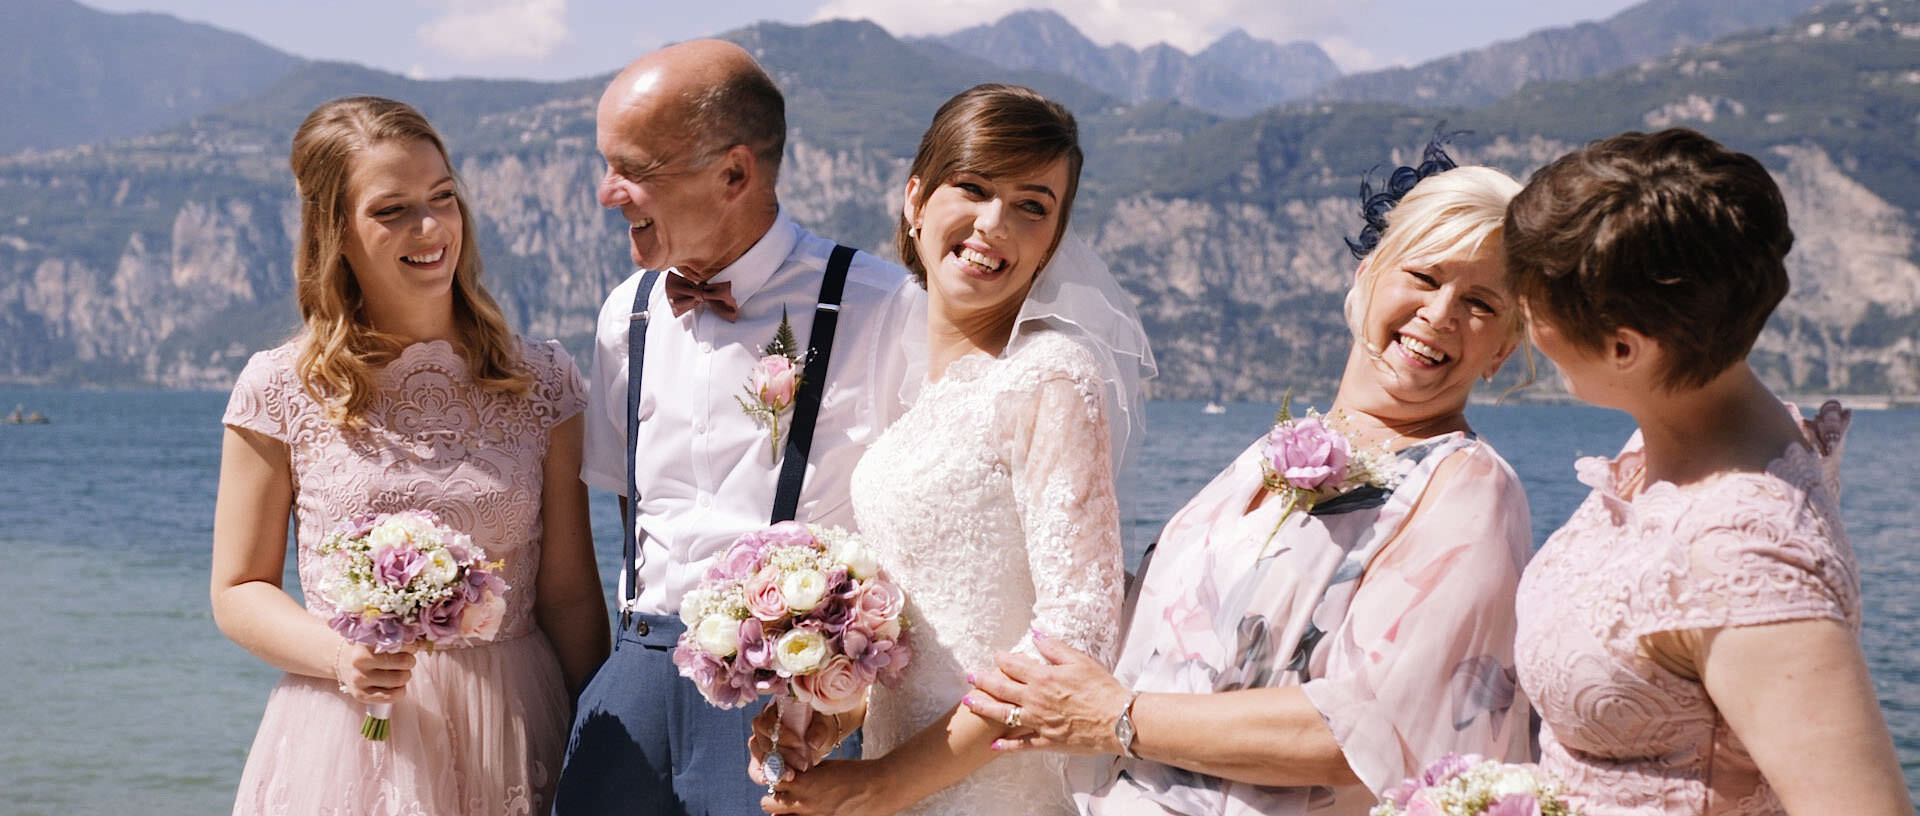 Lisa & Josh's Perfect Malcesine Wedding at Lake Garda 11.jpg